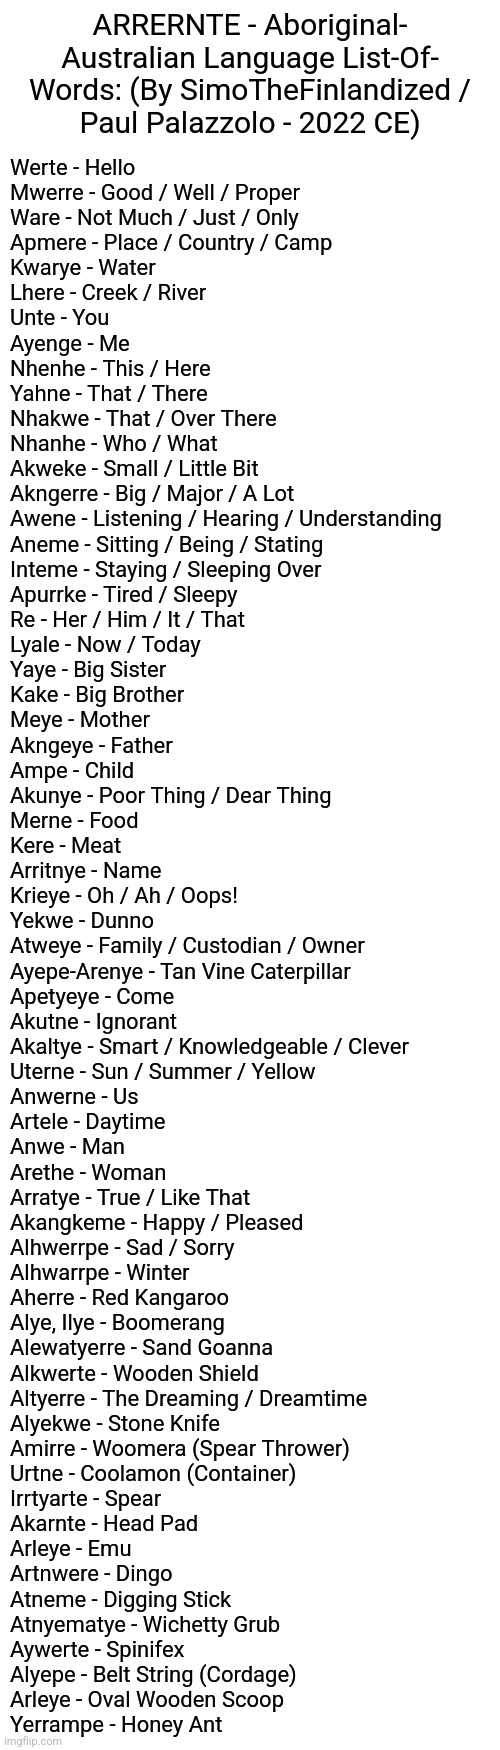 ARRERNTE - Aboriginal-Australian Language List-Of- Words: (By SimoTheFinlandized / Paul Palazzolo - 2022 CE) | ARRERNTE - Aboriginal-
Australian Language List-Of-
Words: (By SimoTheFinlandized /
Paul Palazzolo - 2022 CE); Werte - Hello
Mwerre - Good / Well / Proper
Ware - Not Much / Just / Only
Apmere - Place / Country / Camp
Kwarye - Water
Lhere - Creek / River
Unte - You
Ayenge - Me
Nhenhe - This / Here
Yahne - That / There
Nhakwe - That / Over There
Nhanhe - Who / What
Akweke - Small / Little Bit
Akngerre - Big / Major / A Lot
Awene - Listening / Hearing / Understanding 
Aneme - Sitting / Being / Stating
Inteme - Staying / Sleeping Over
Apurrke - Tired / Sleepy
Re - Her / Him / It / That
Lyale - Now / Today
Yaye - Big Sister
Kake - Big Brother
Meye - Mother
Akngeye - Father
Ampe - Child
Akunye - Poor Thing / Dear Thing
Merne - Food
Kere - Meat
Arritnye - Name
Krieye - Oh / Ah / Oops!
Yekwe - Dunno
Atweye - Family / Custodian / Owner
Ayepe-Arenye - Tan Vine Caterpillar
Apetyeye - Come
Akutne - Ignorant
Akaltye - Smart / Knowledgeable / Clever
Uterne - Sun / Summer / Yellow
Anwerne - Us
Artele - Daytime 
Anwe - Man
Arethe - Woman
Arratye - True / Like That
Akangkeme - Happy / Pleased
Alhwerrpe - Sad / Sorry
Alhwarrpe - Winter
Aherre - Red Kangaroo
Alye, Ilye - Boomerang
Alewatyerre - Sand Goanna
Alkwerte - Wooden Shield
Altyerre - The Dreaming / Dreamtime
Alyekwe - Stone Knife
Amirre - Woomera (Spear Thrower)
Urtne - Coolamon (Container)
Irrtyarte - Spear
Akarnte - Head Pad
Arleye - Emu
Artnwere - Dingo
Atneme - Digging Stick
Atnyematye - Wichetty Grub
Aywerte - Spinifex
Alyepe - Belt String (Cordage)
Arleye - Oval Wooden Scoop
Yerrampe - Honey Ant | image tagged in simothefinlandized,aboriginal australia,languages,vocabulary,list,infographic | made w/ Imgflip meme maker